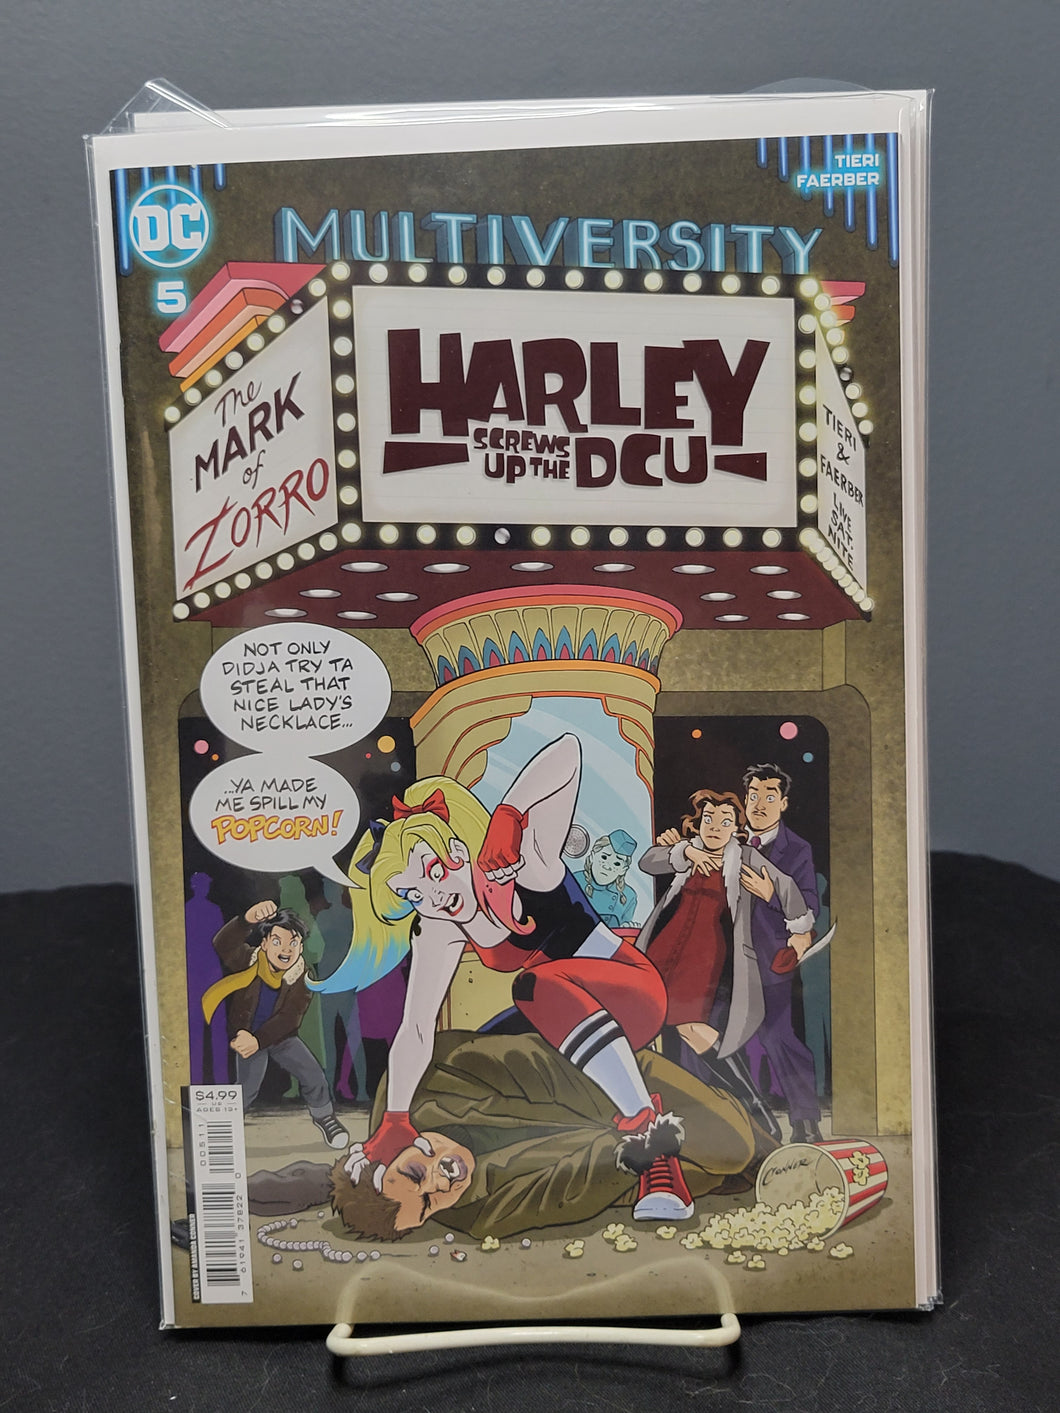 Multiversity Harley Screws Up The DCU #5